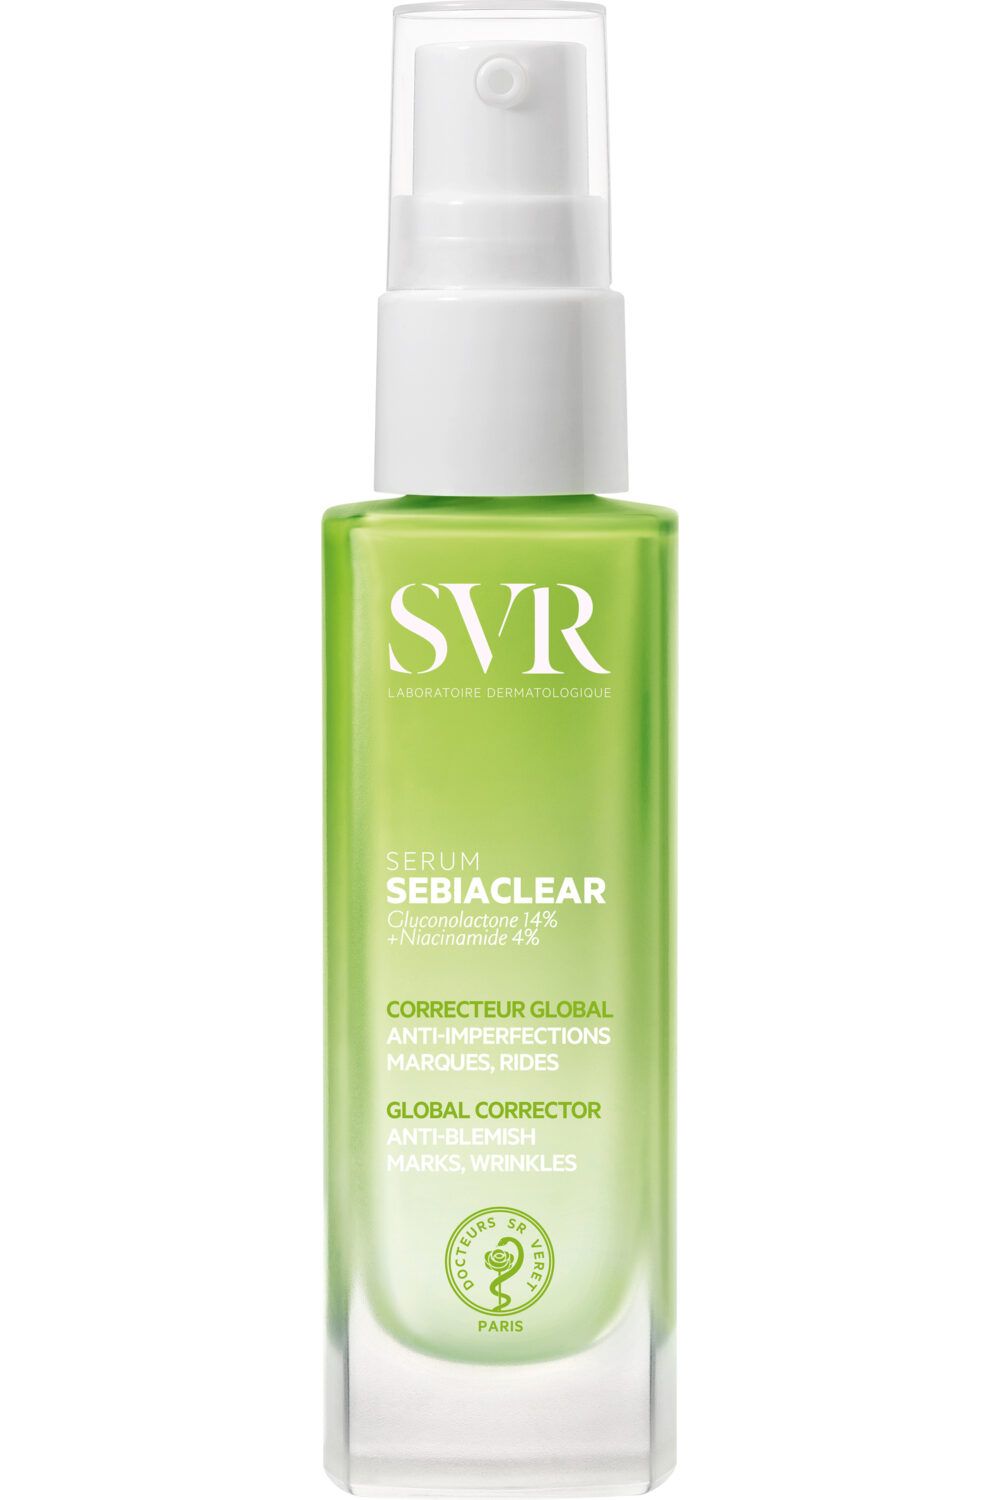 SVR - Correcteur global anti-imperfections, marques, rides Sebiaclear Serum